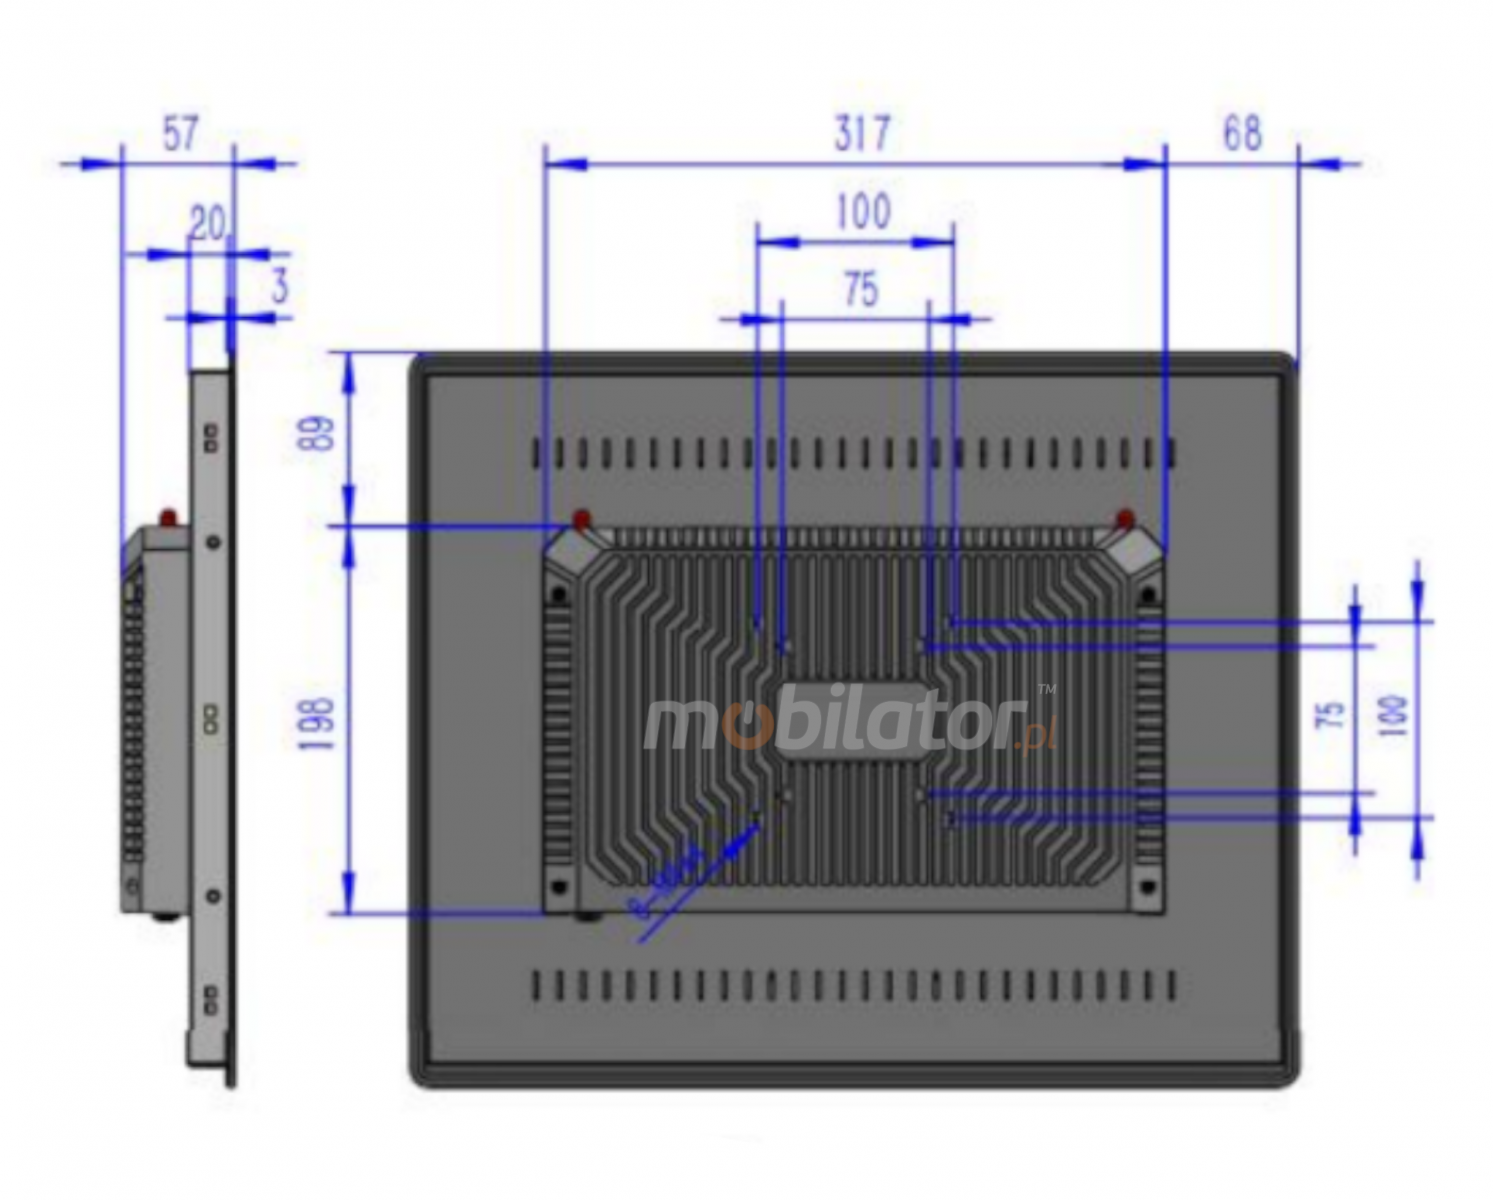  modern panel BIBOX-190PC2 and its dimensions